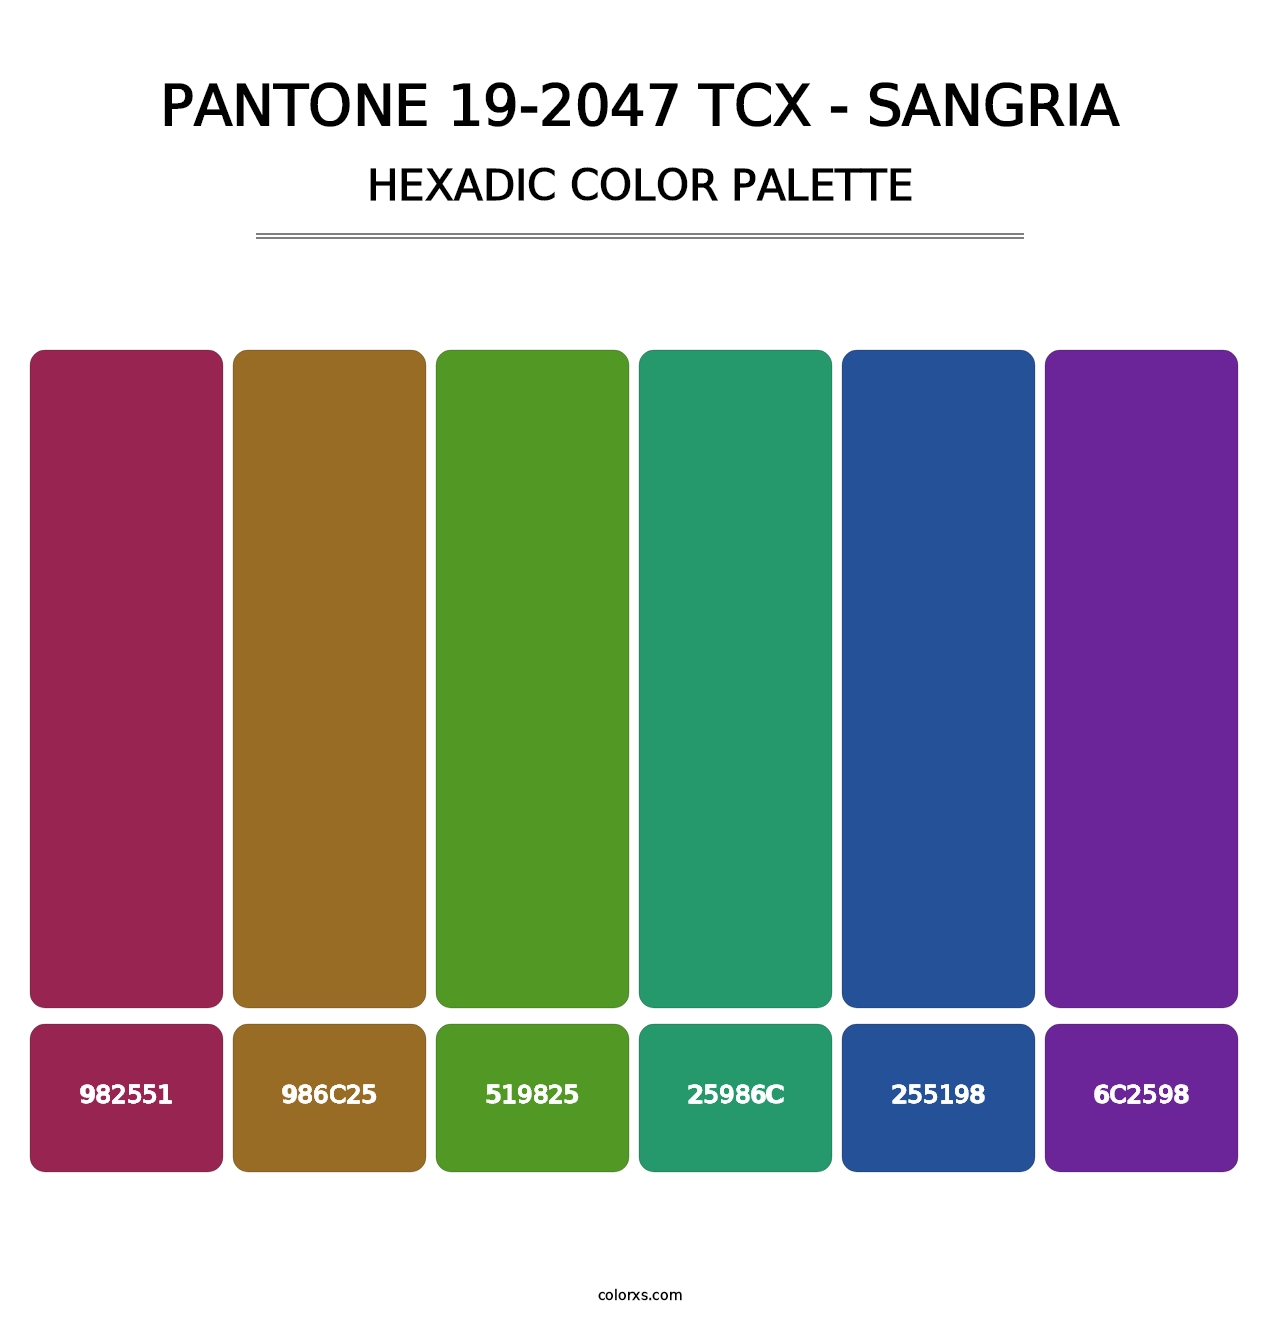 PANTONE 19-2047 TCX - Sangria - Hexadic Color Palette